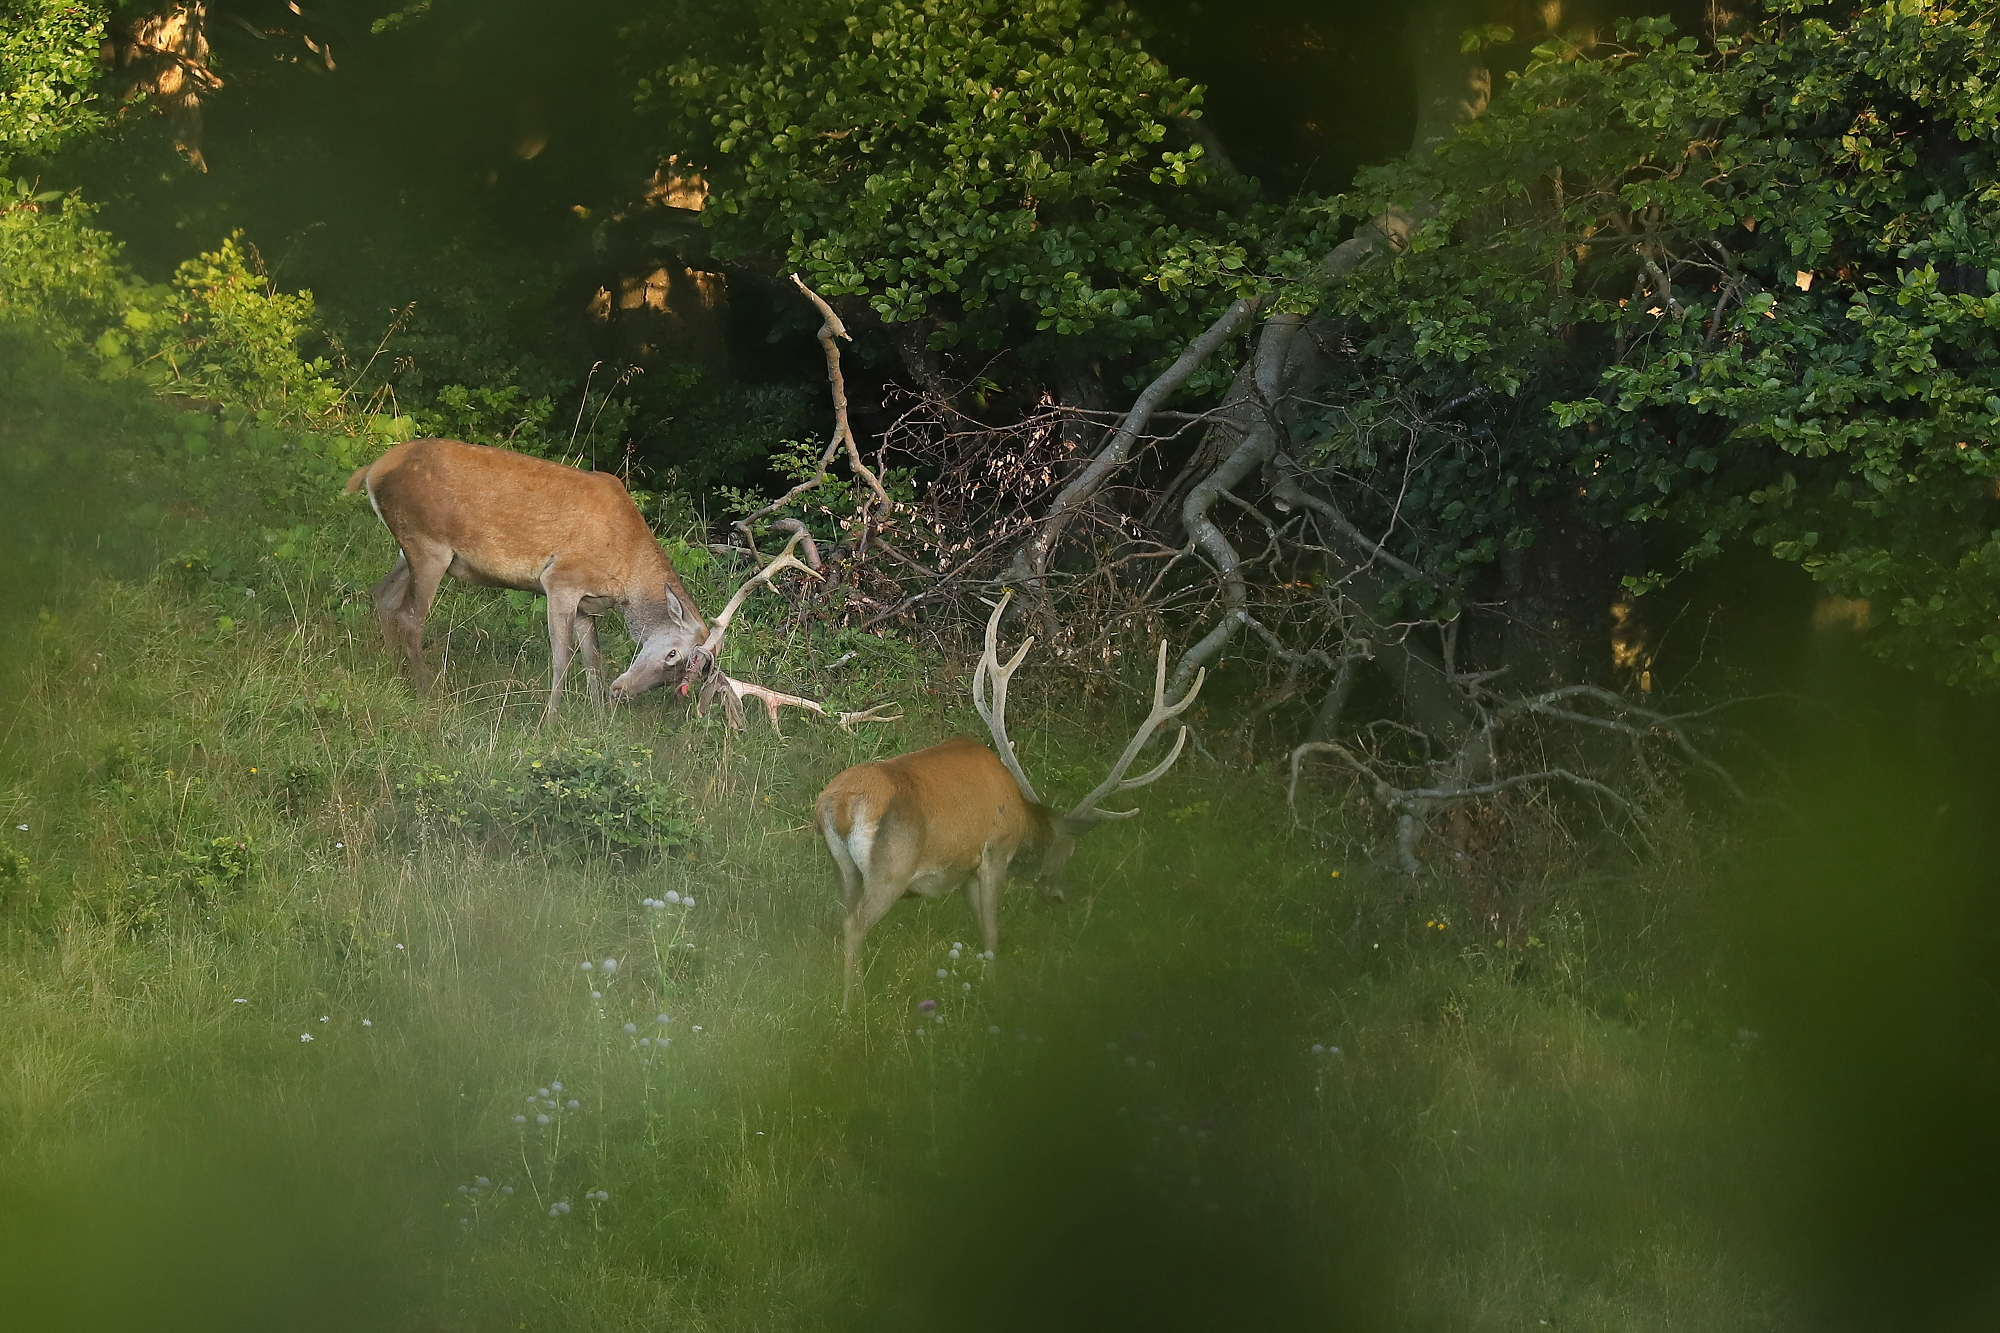 jeleň lesný (Cervus elaphus) Red deer, Malá Fatra, Slovensko Canon EOS 6d mark II + Canon 100-400 f4.5-5.6 L IS II USM, 400mm, 1/400, f5.6, ISO 1000, 3. august 2021